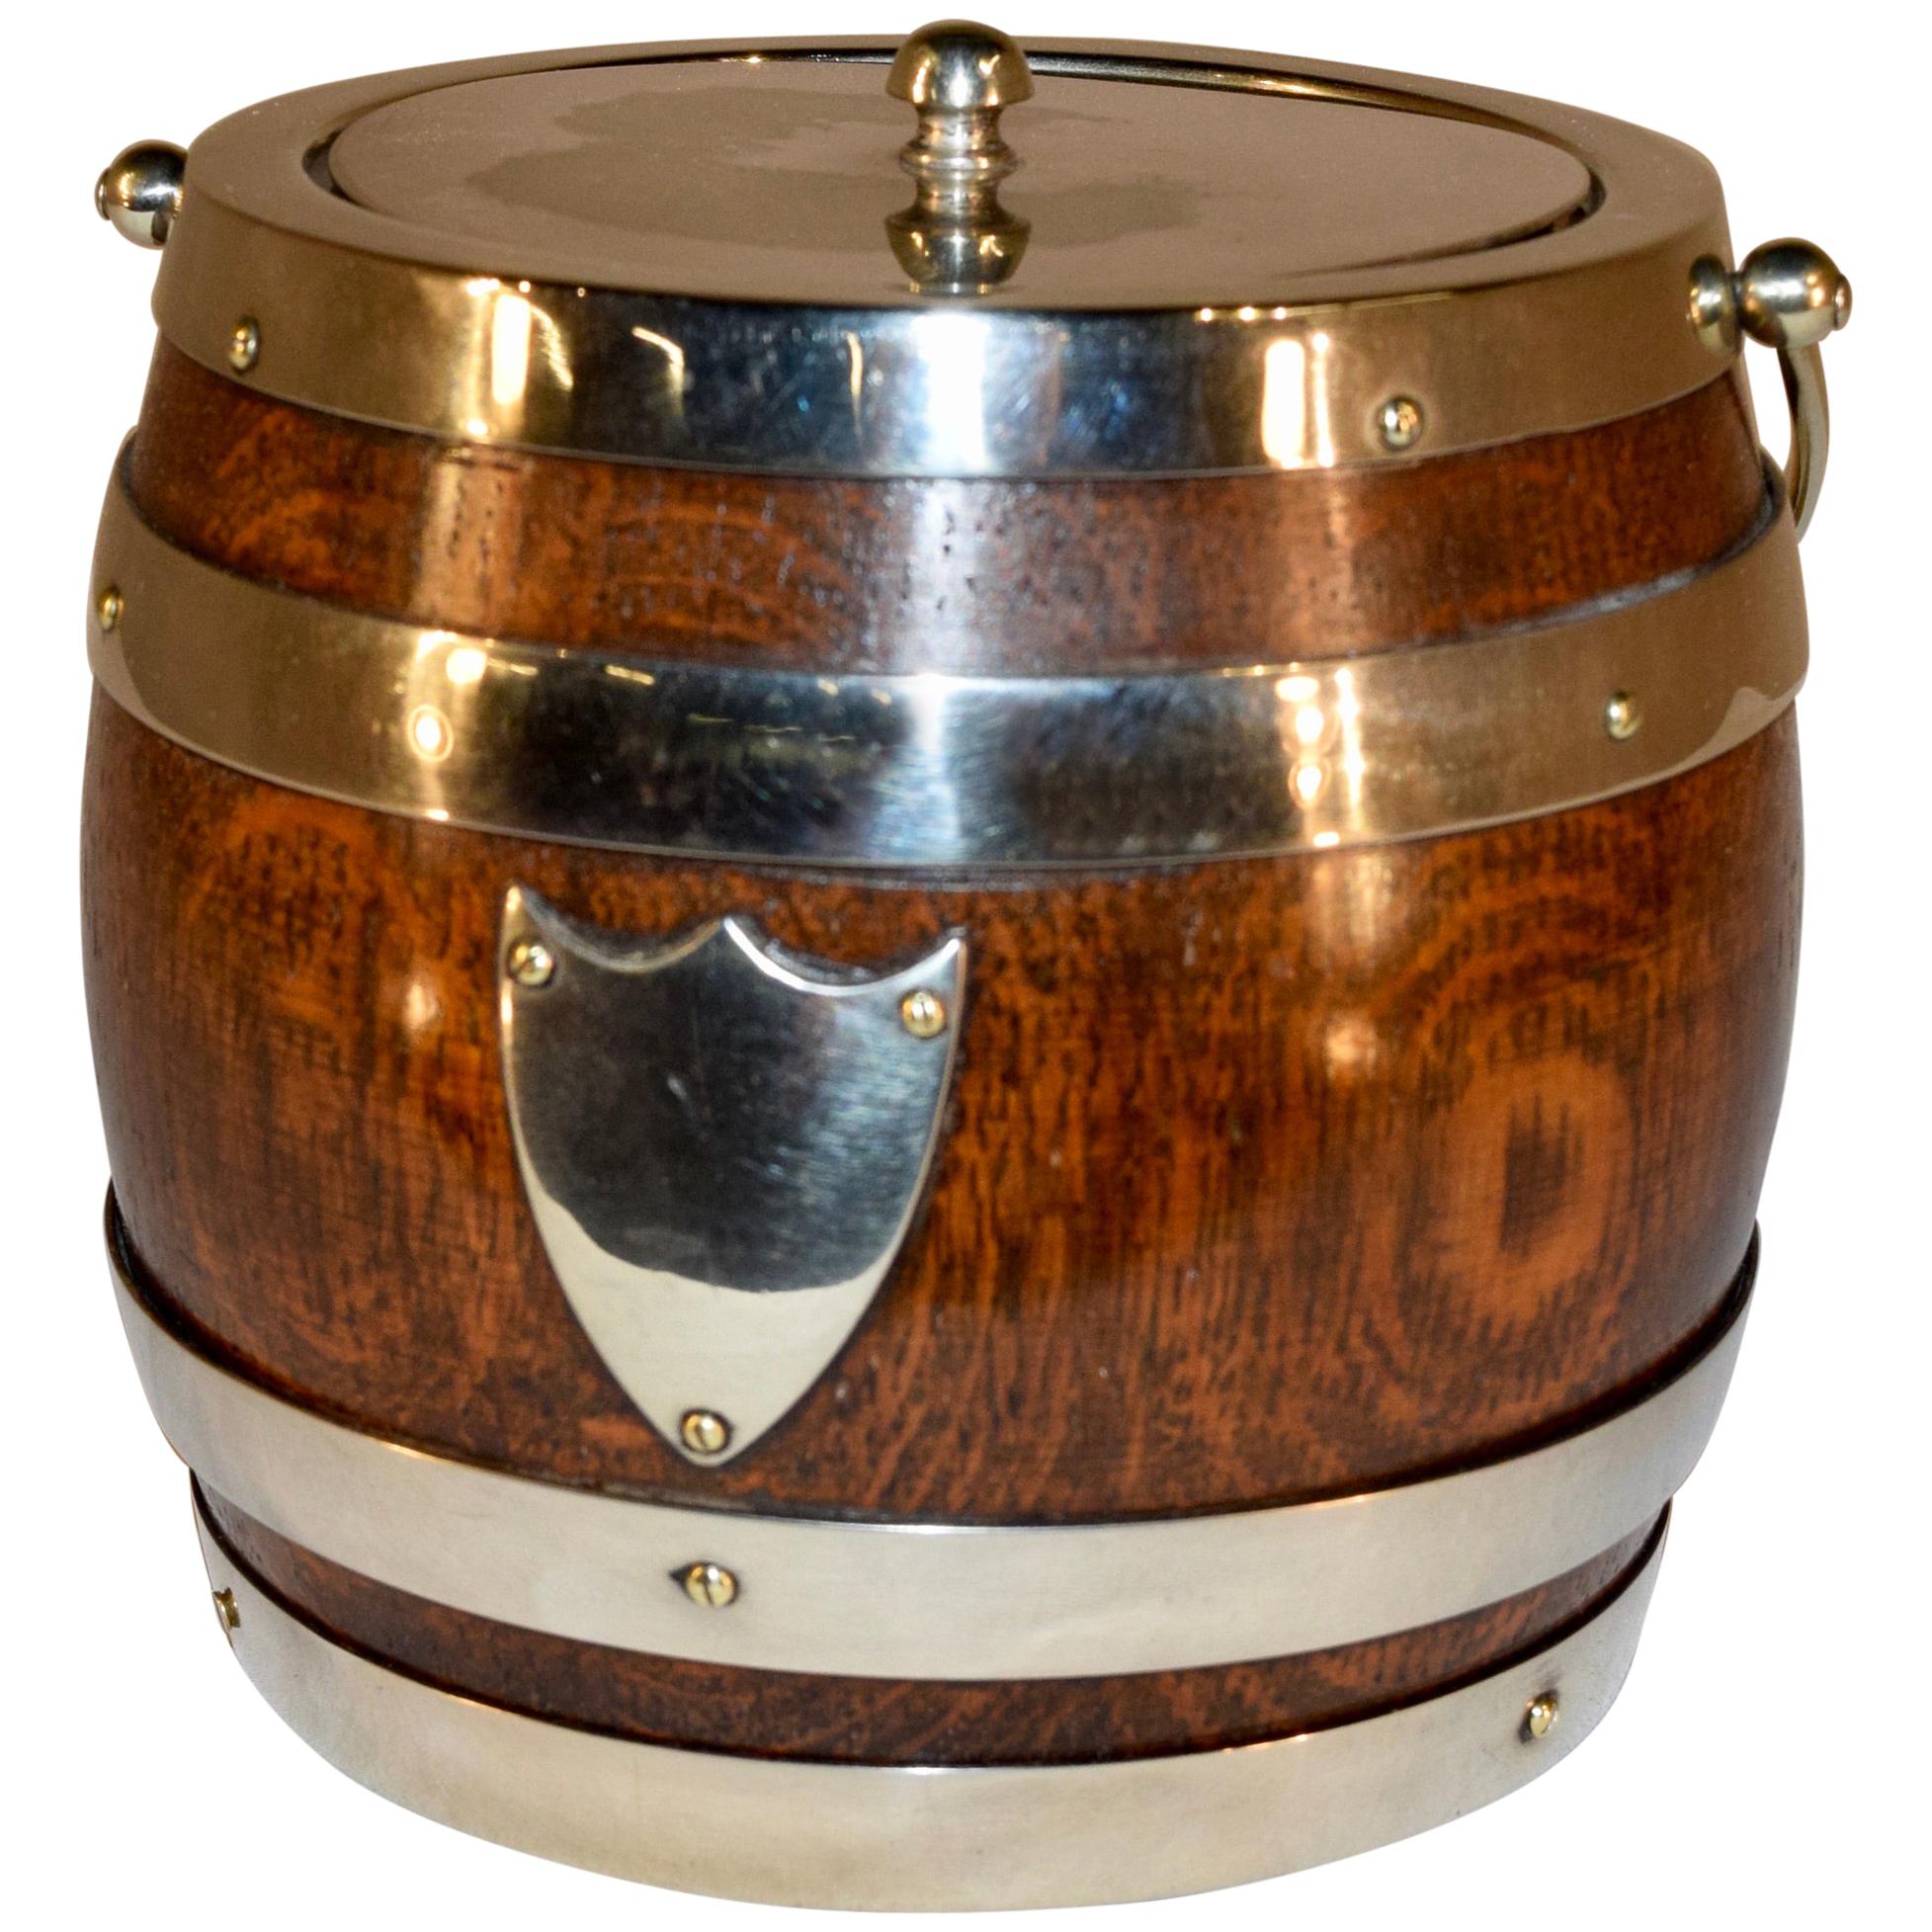 English Oak Biscuit Barrel, circa 1900